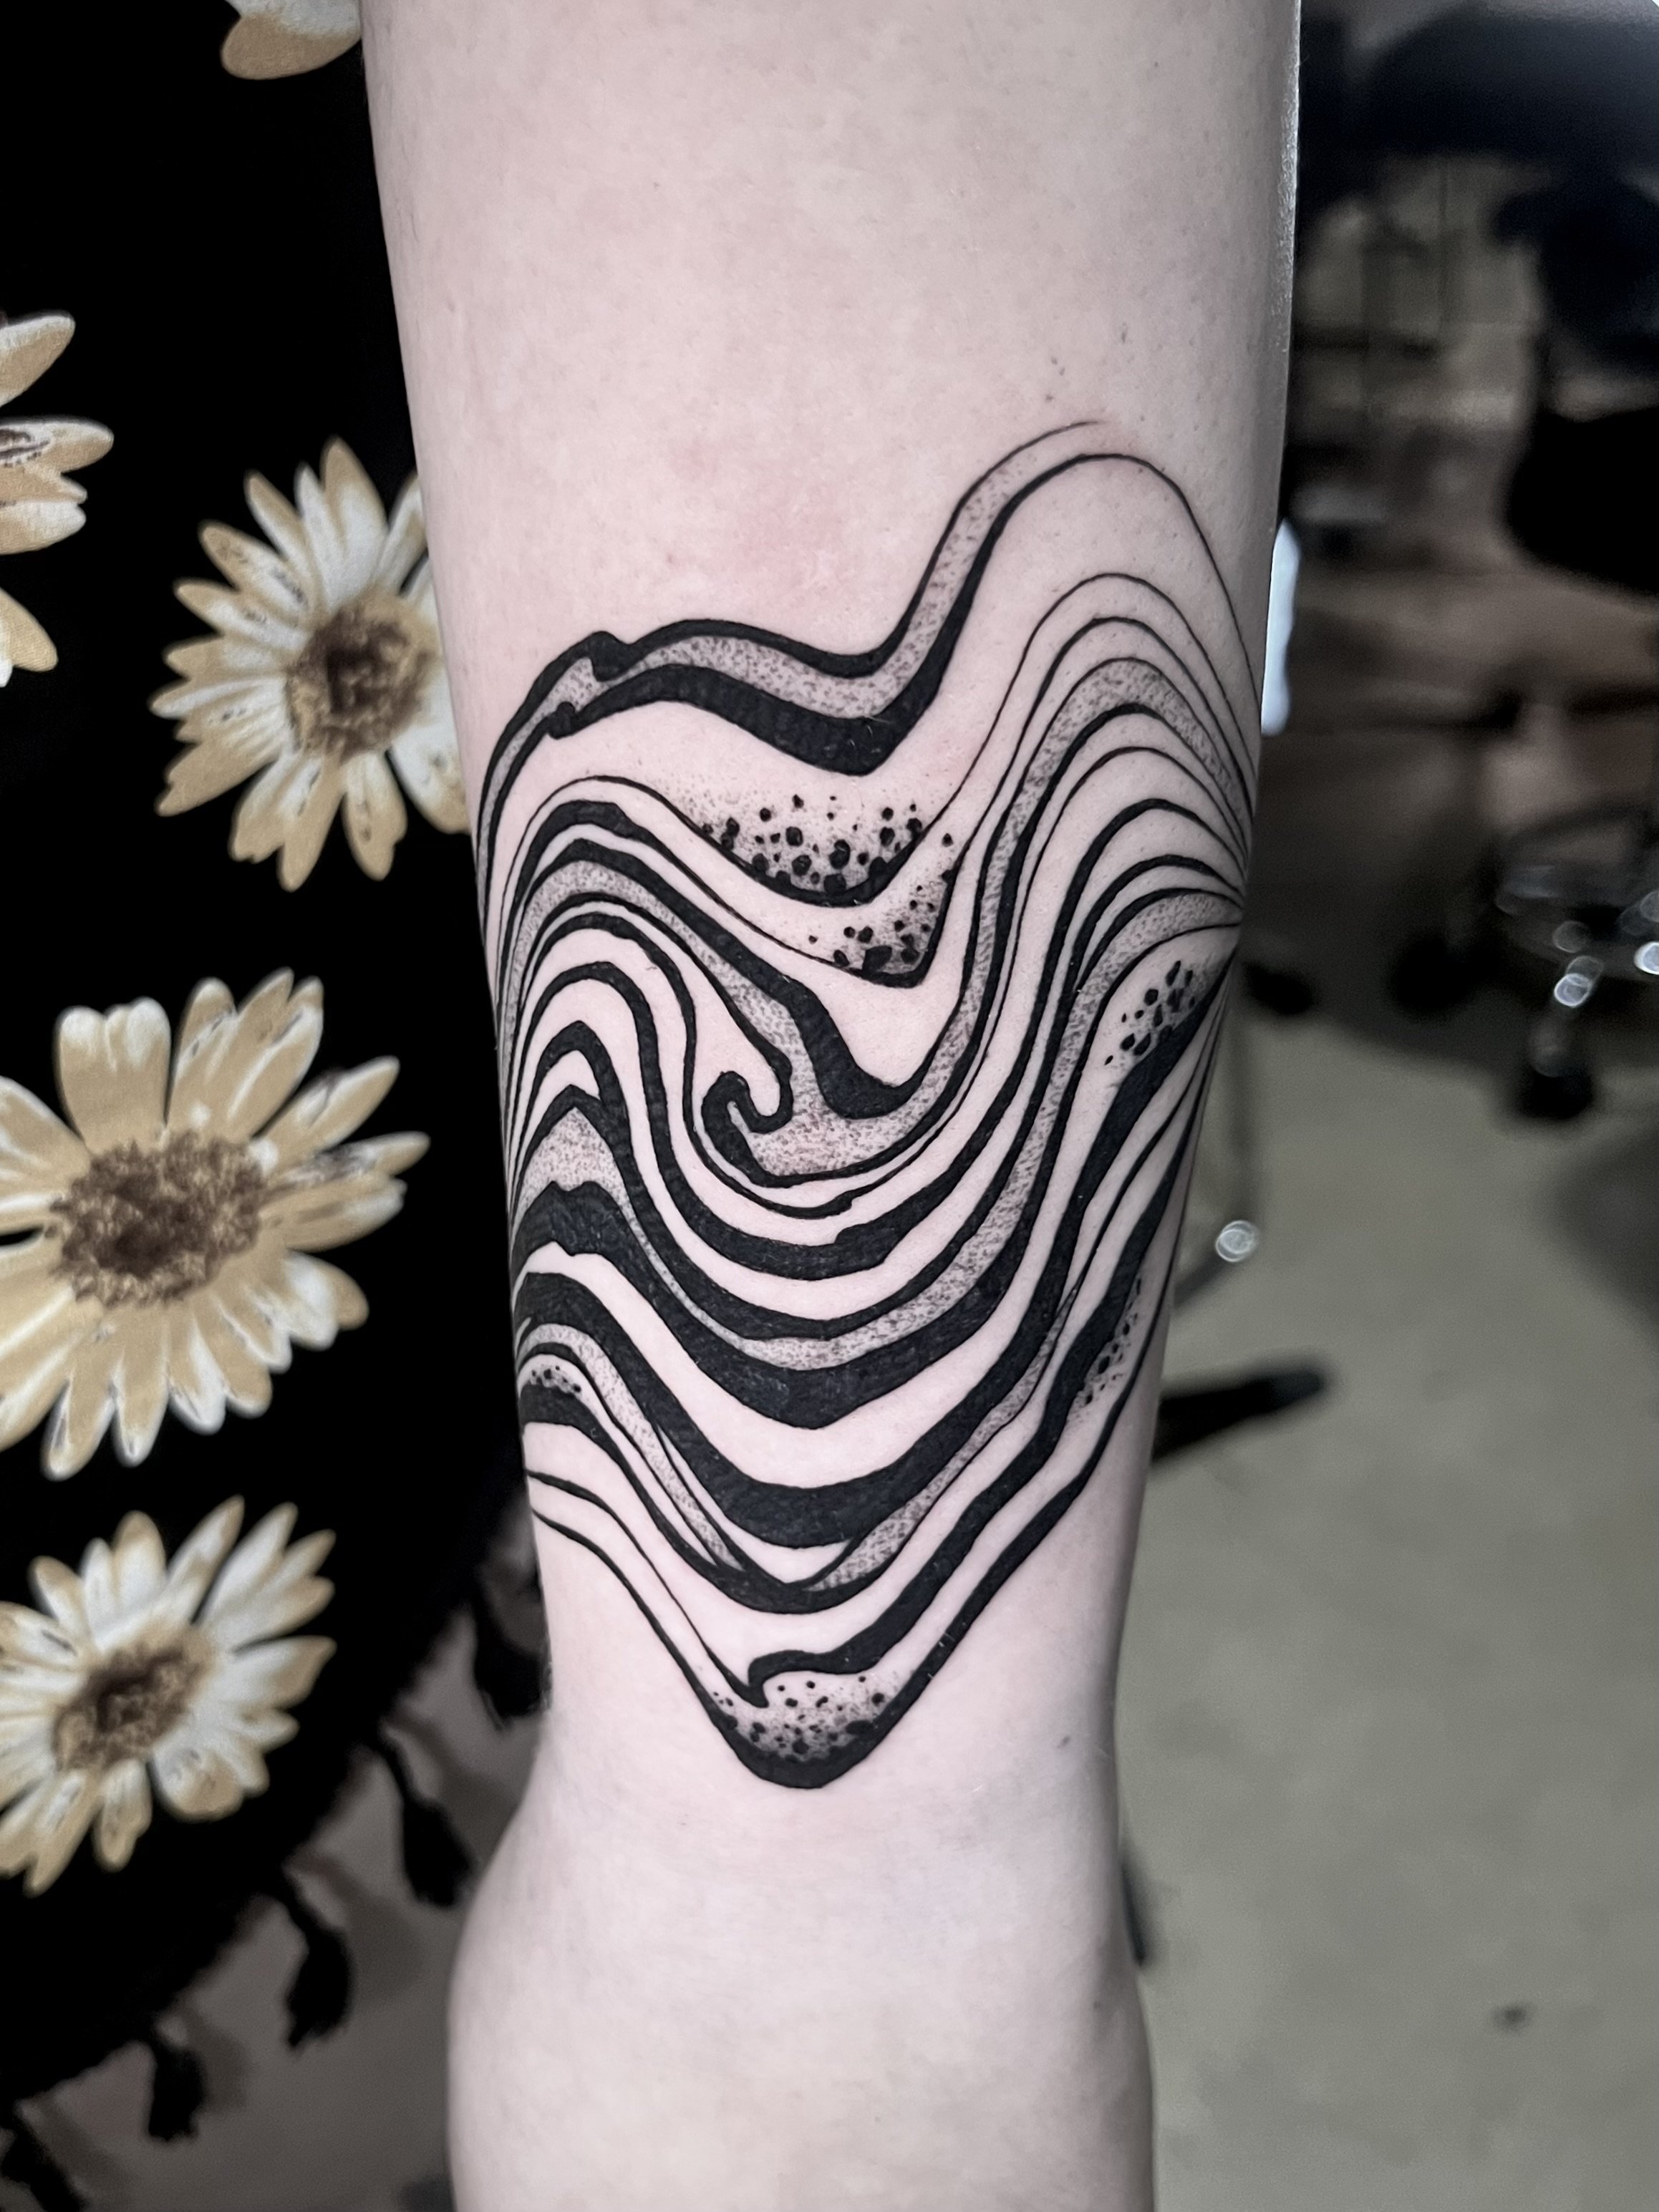 Joy Division Tattoo by PsychoHoliday777 on DeviantArt